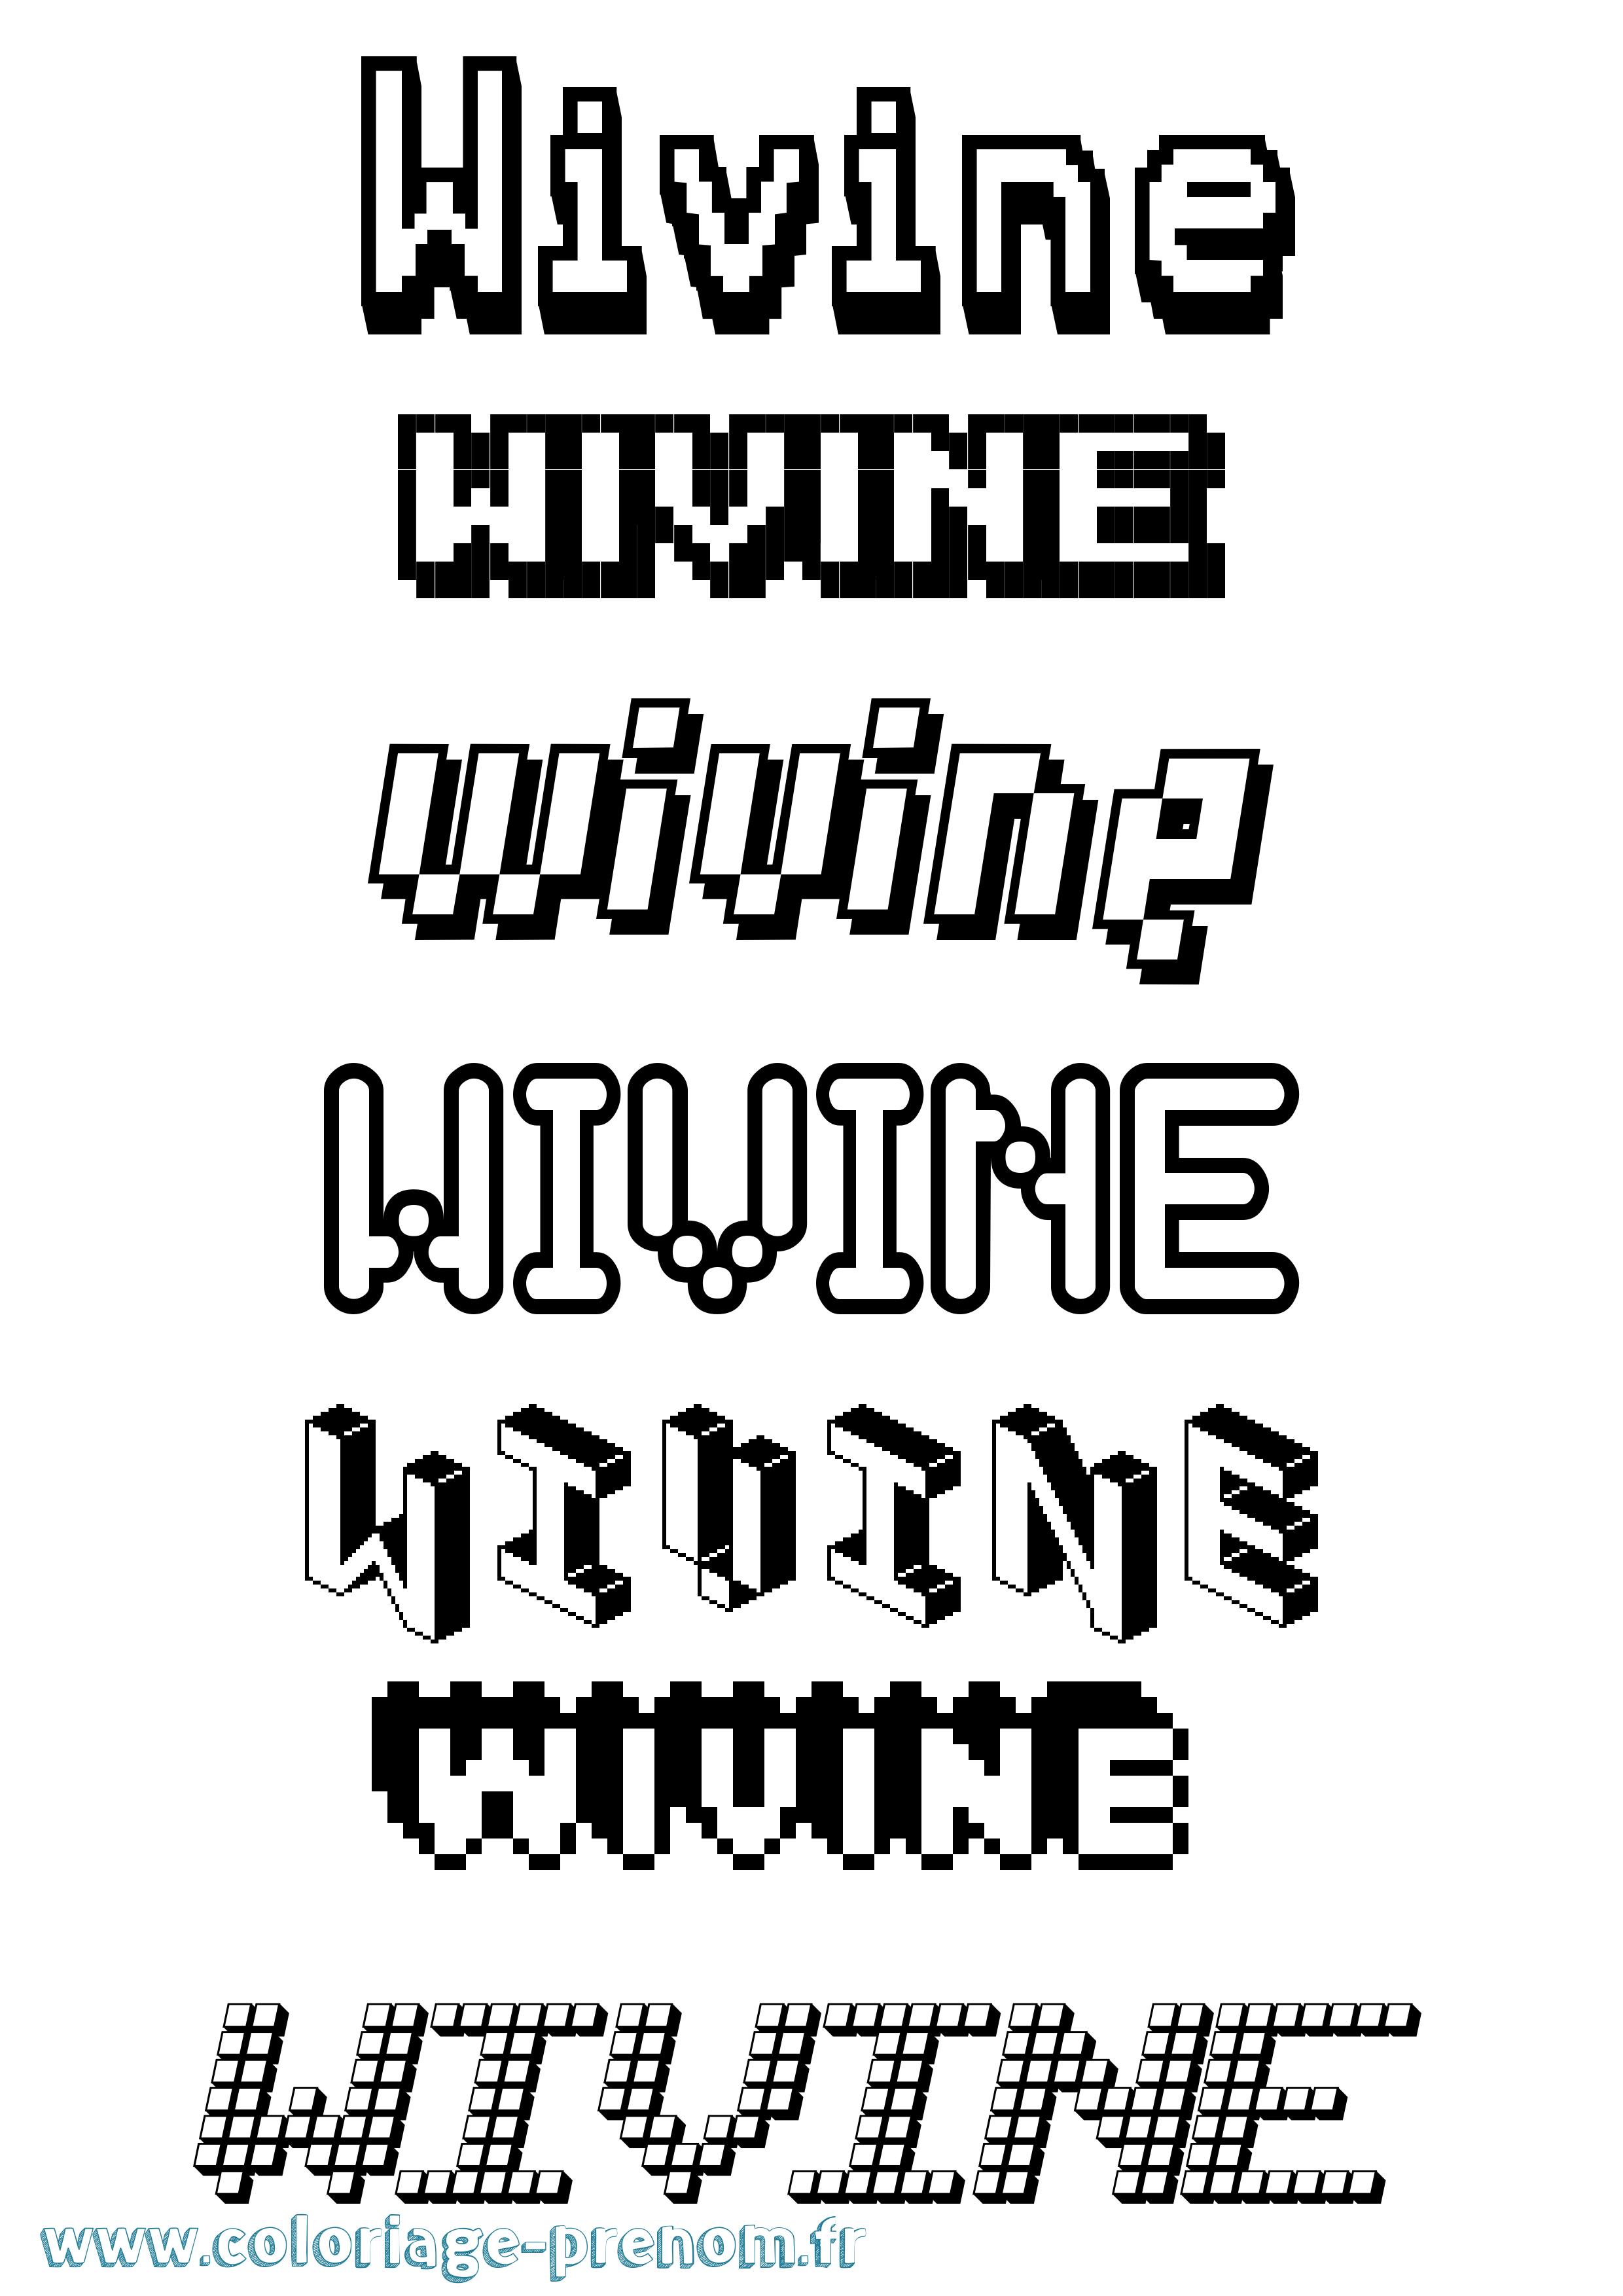 Coloriage prénom Wivine Pixel